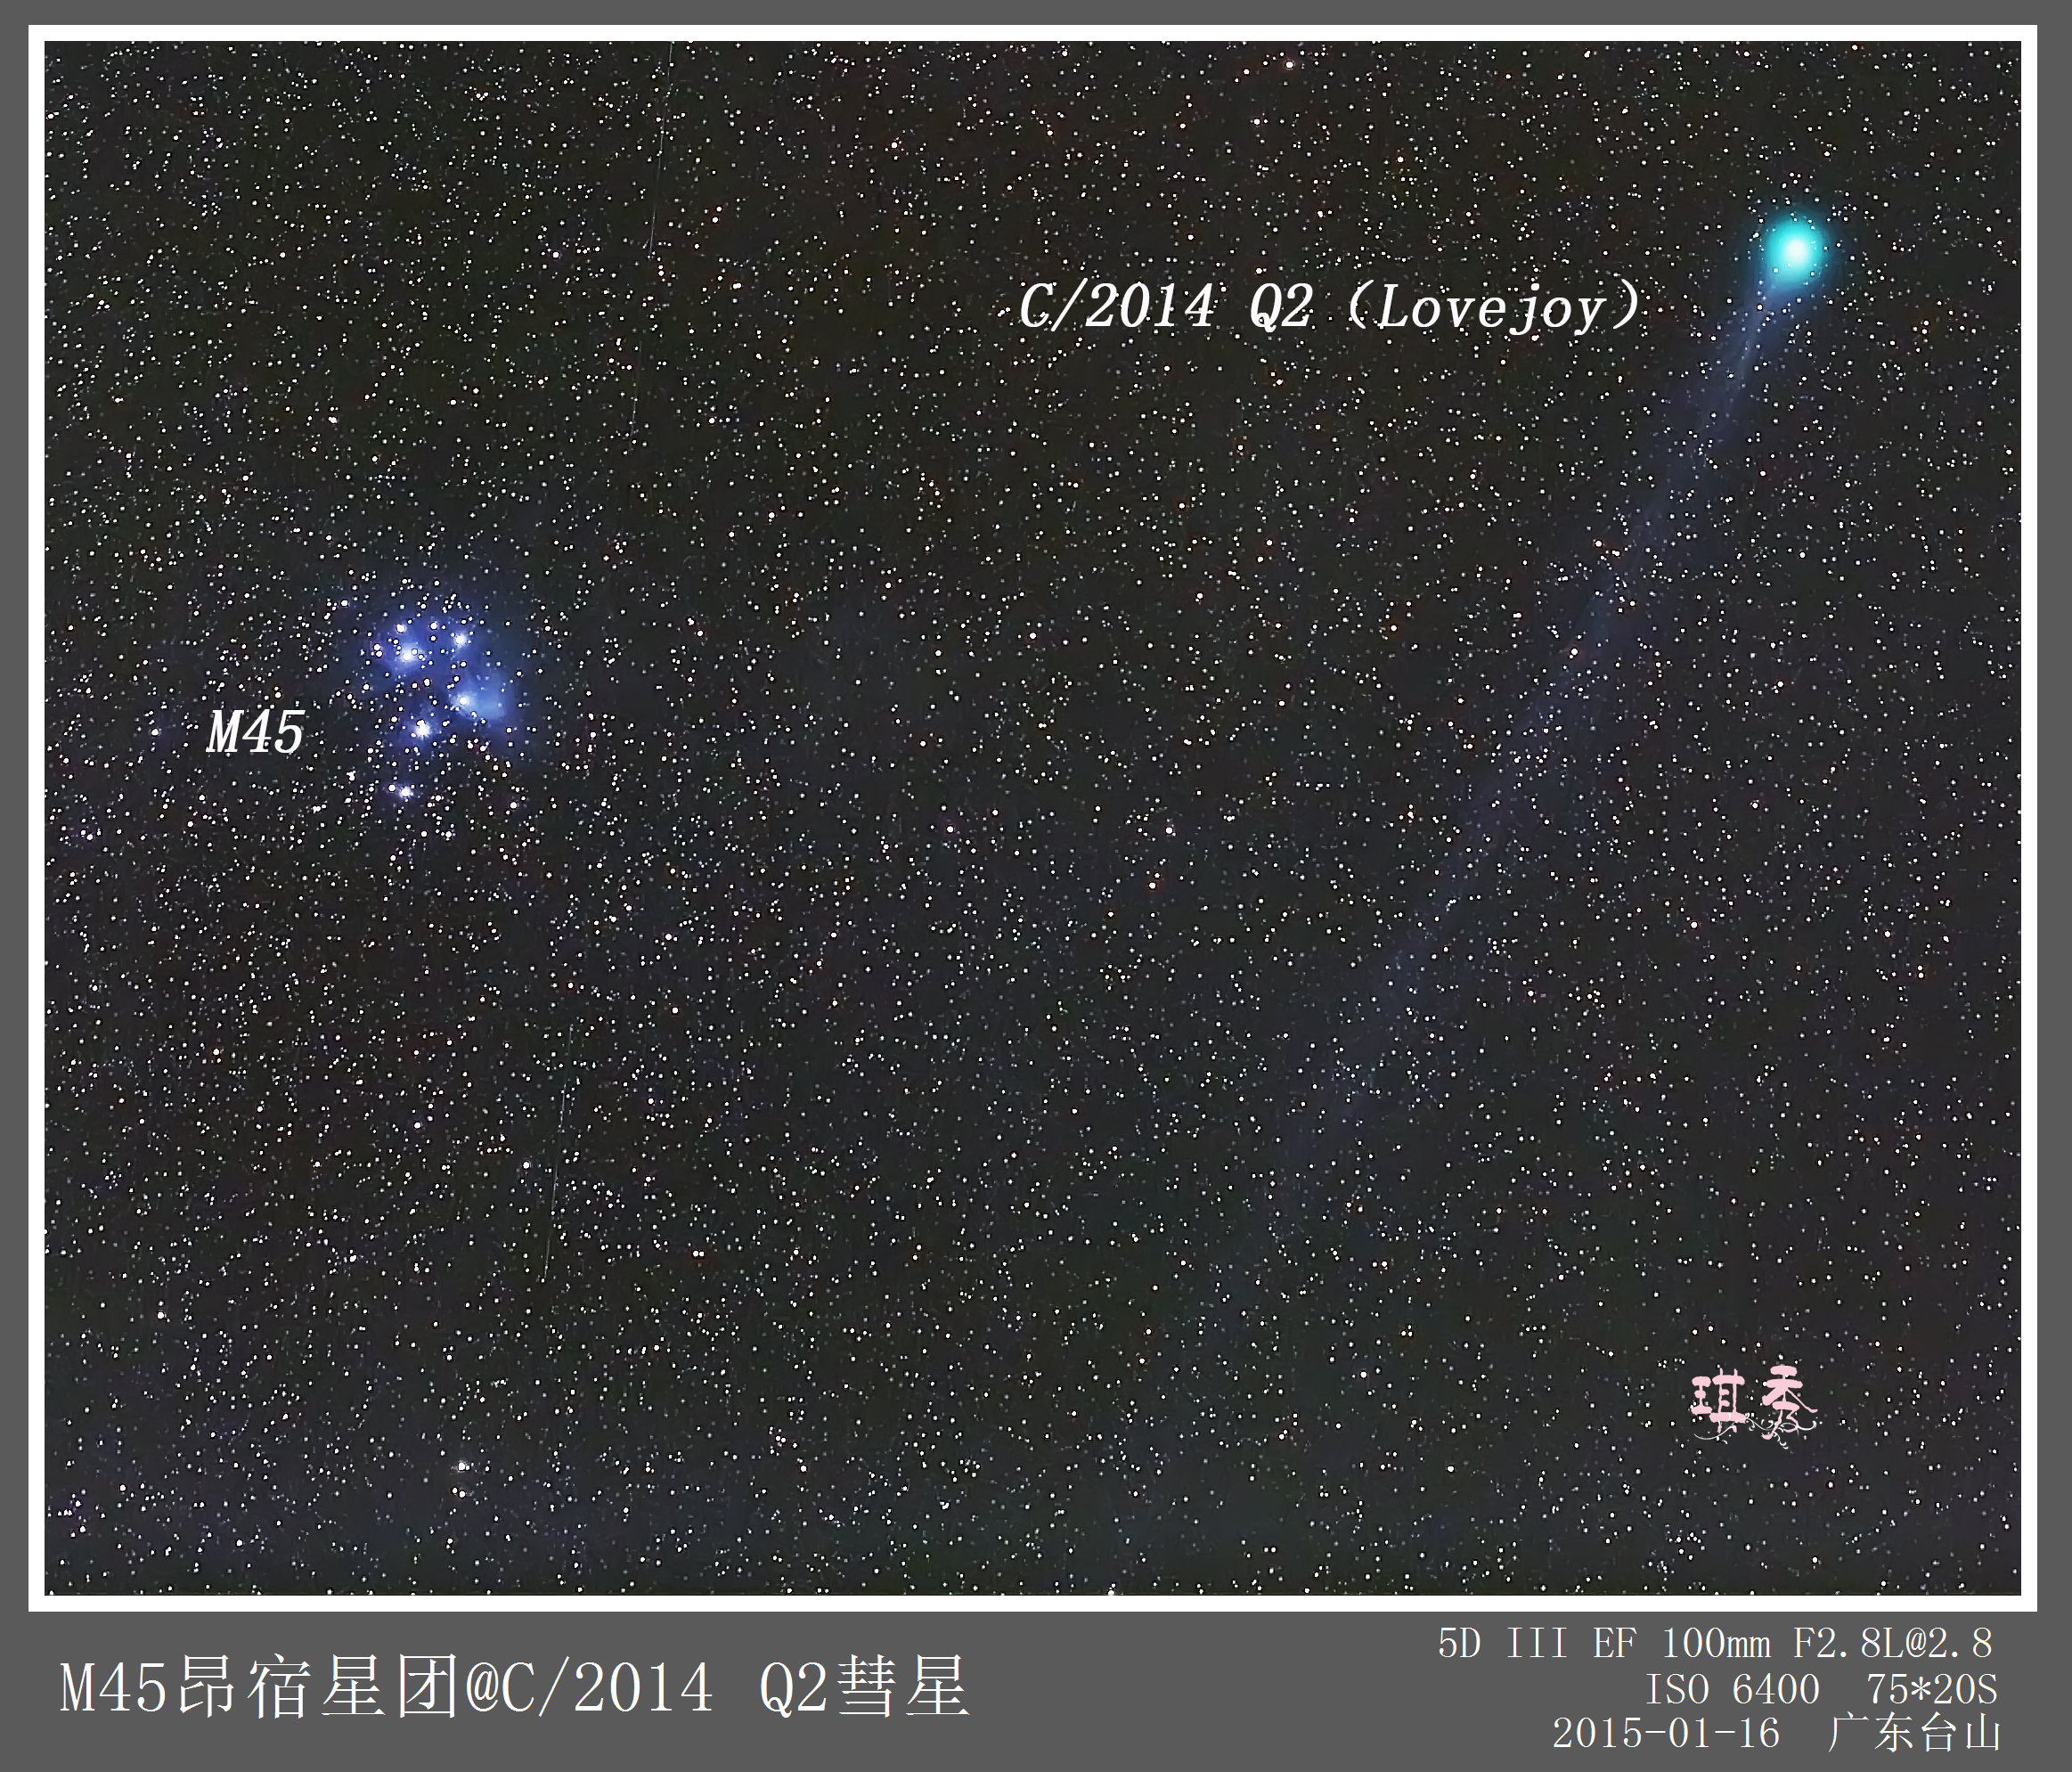 _bak彗星Q2 @M45副本.jpg